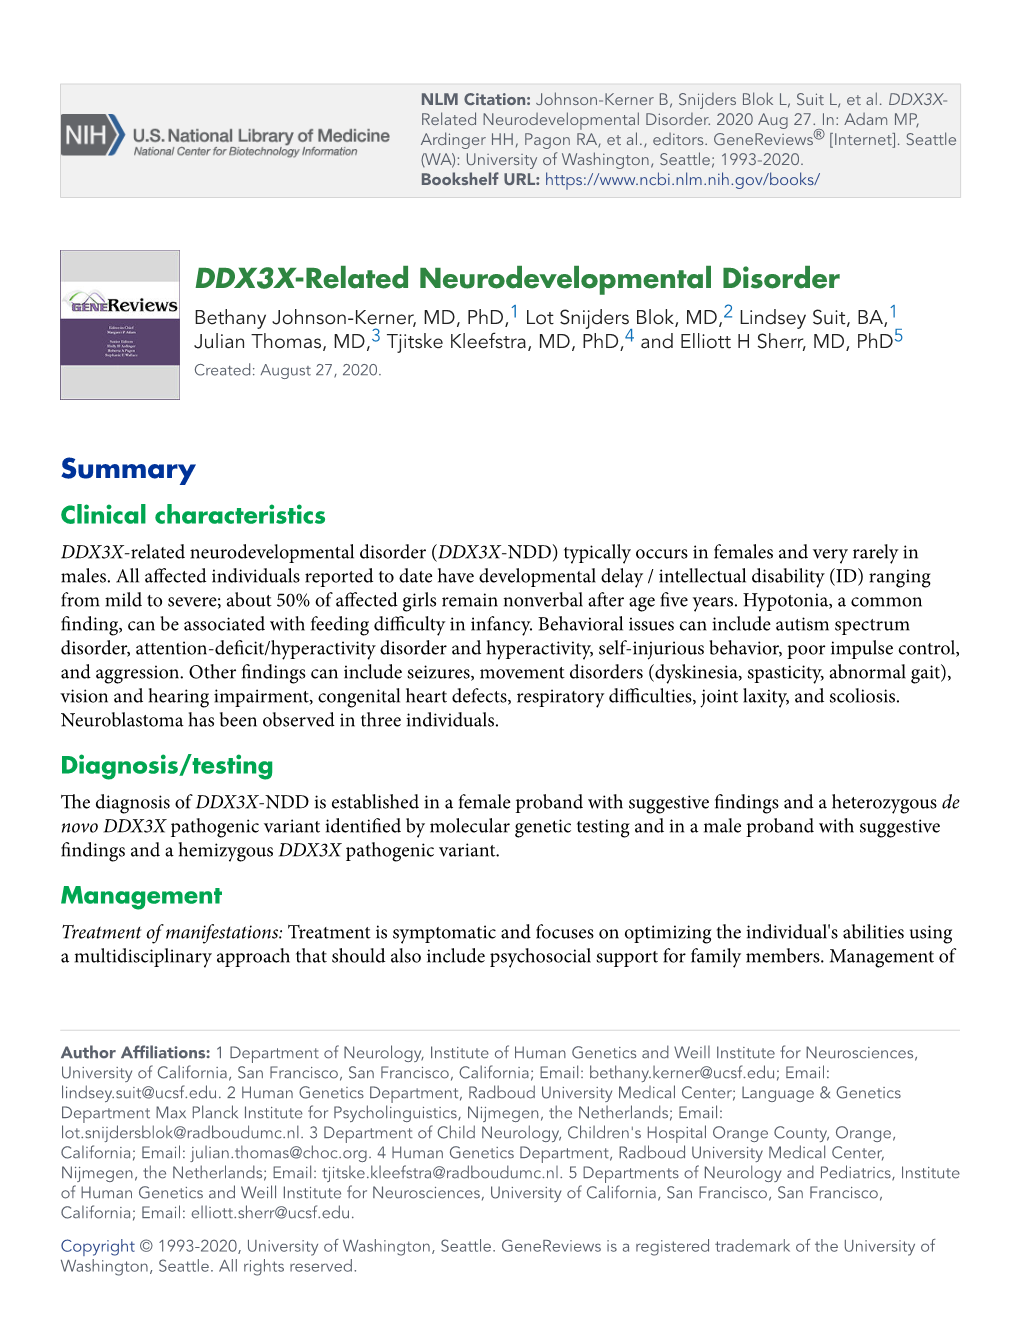 DDX3X-Related Neurodevelopmental Disorder